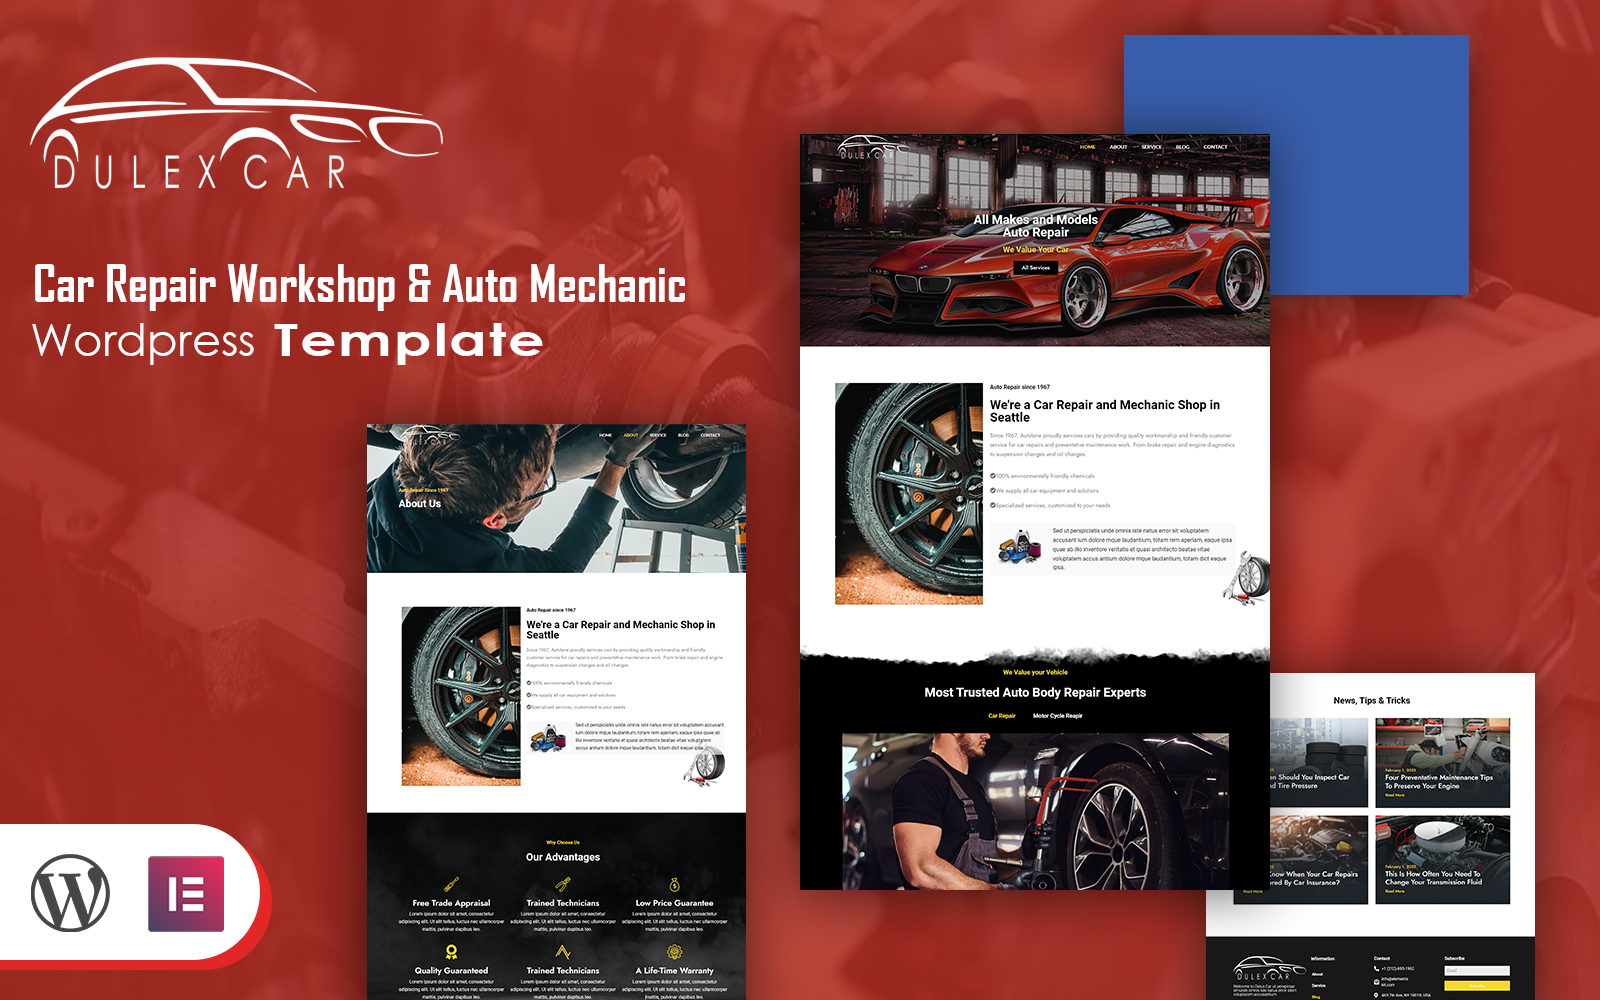 Deluxcar - Car Repair Workshop & Auto Mechanic WordPress Theme